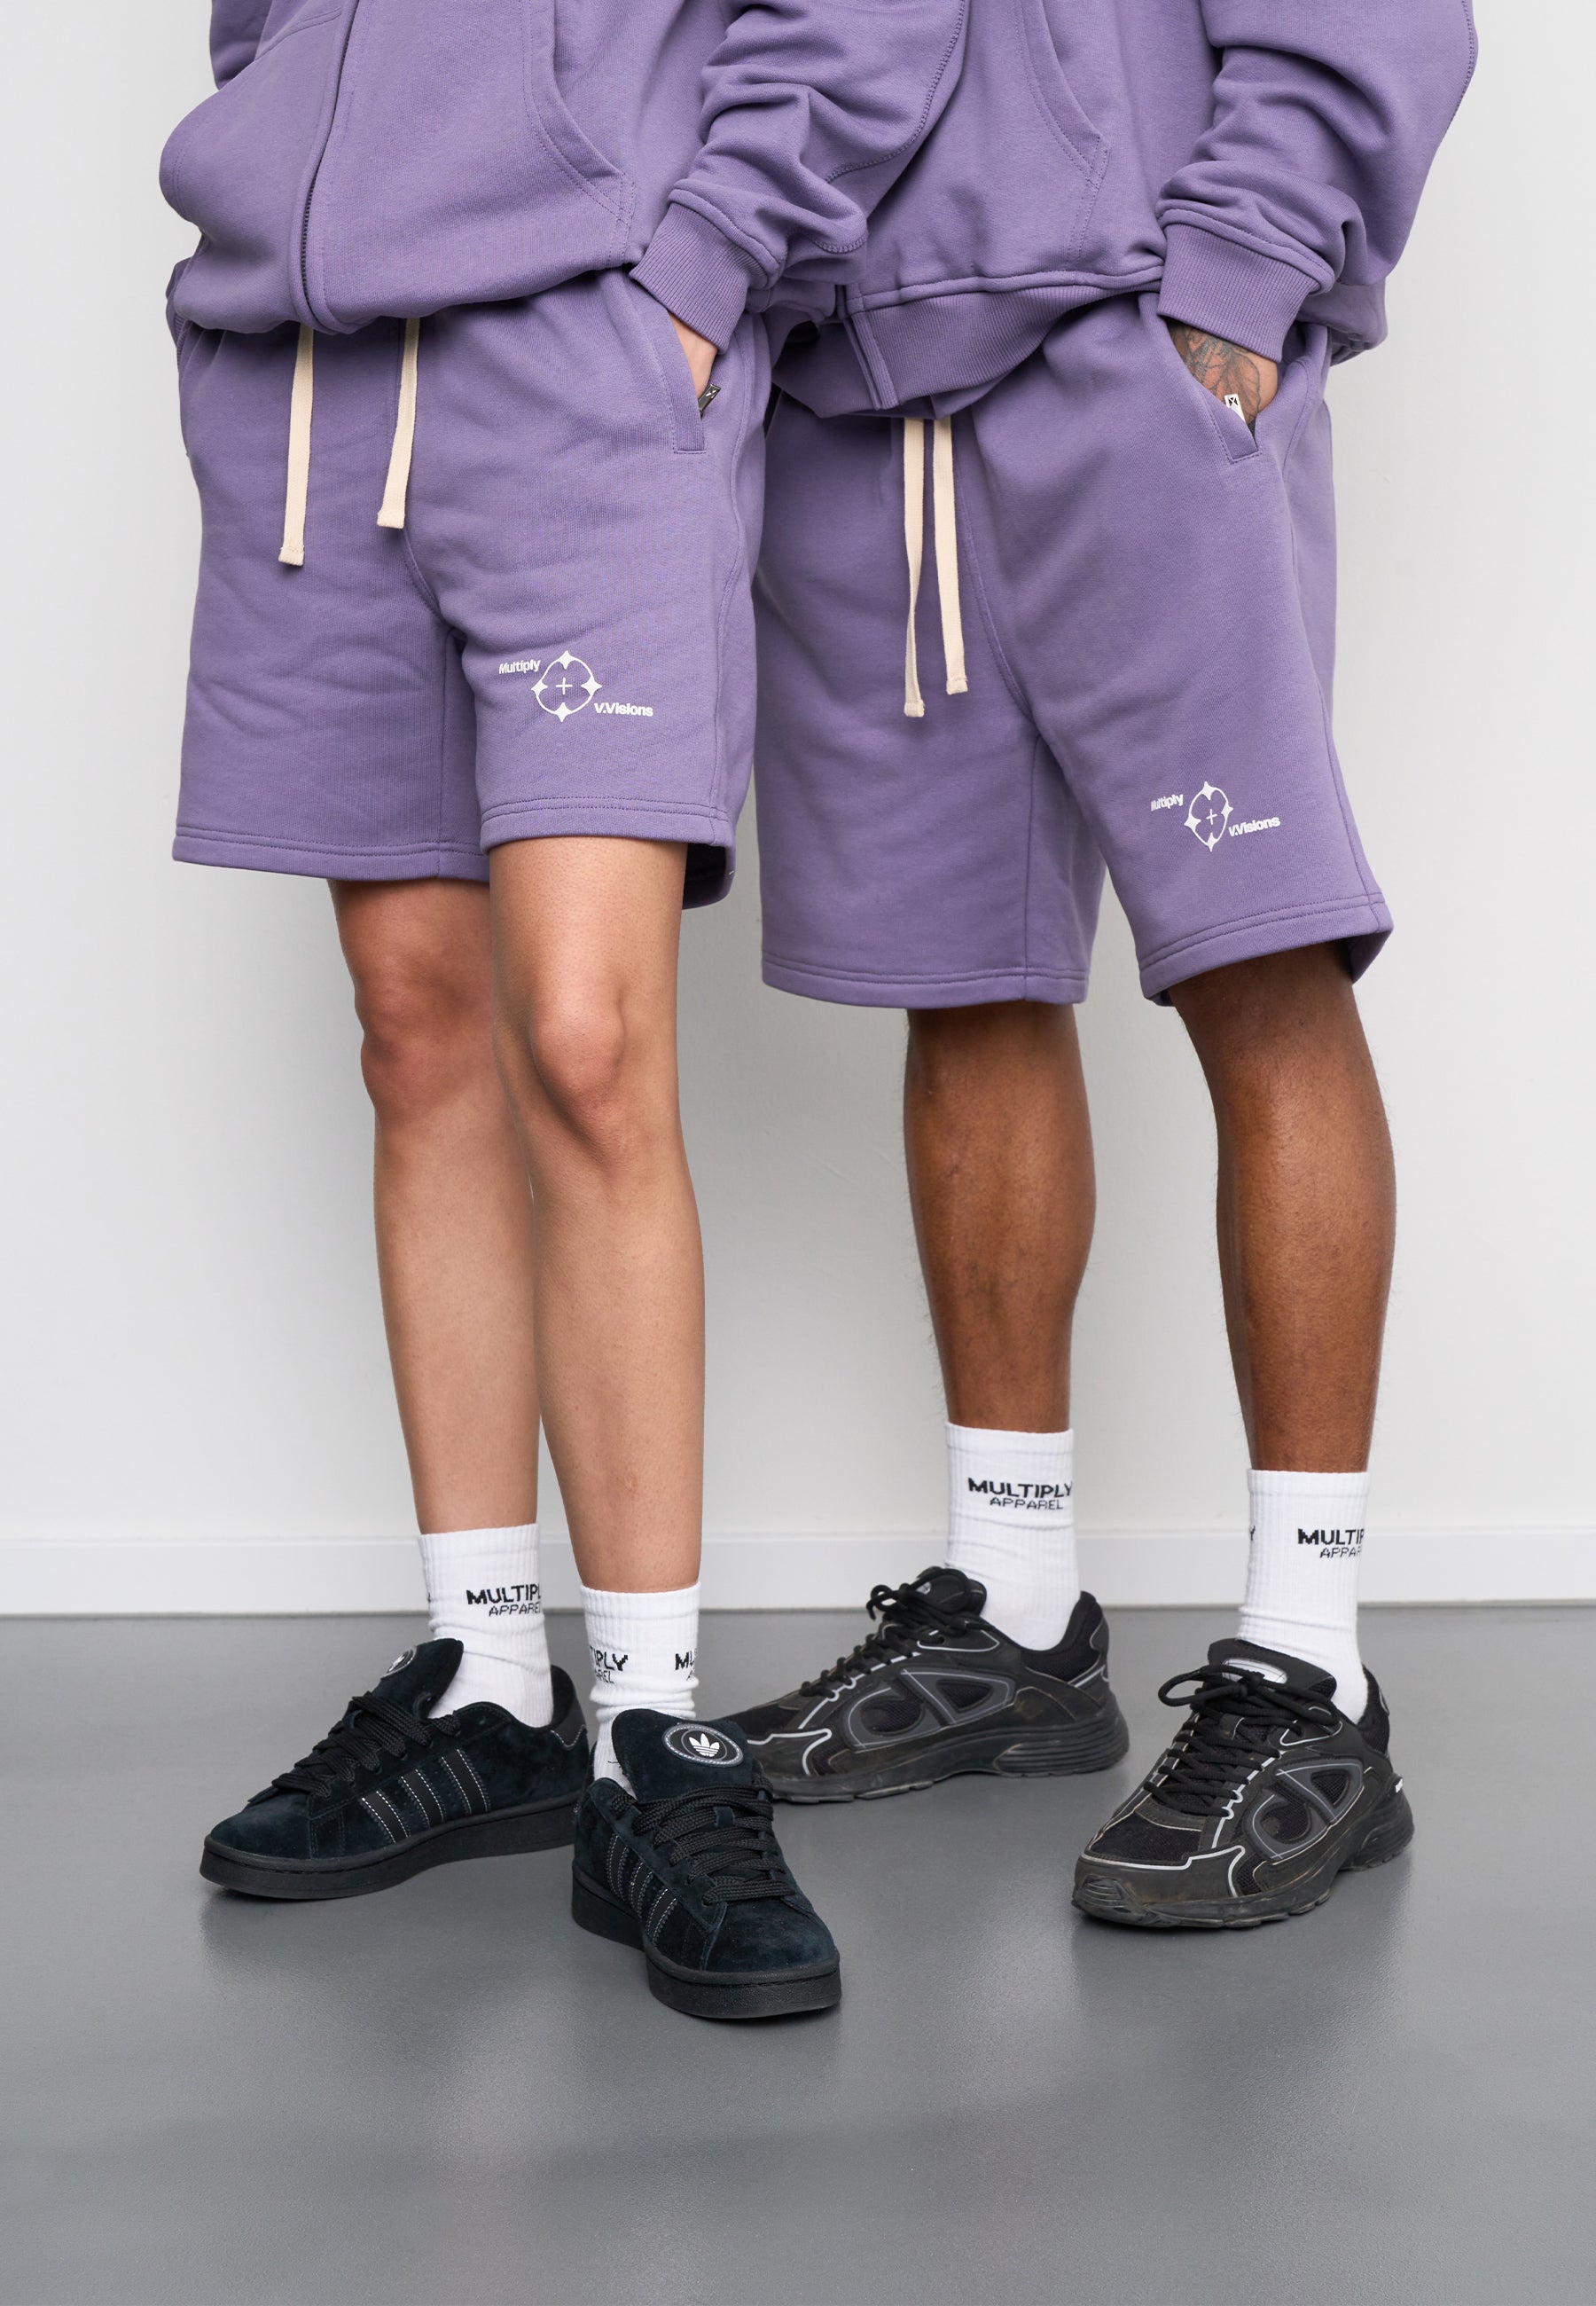 FOCUS Cadet shorts